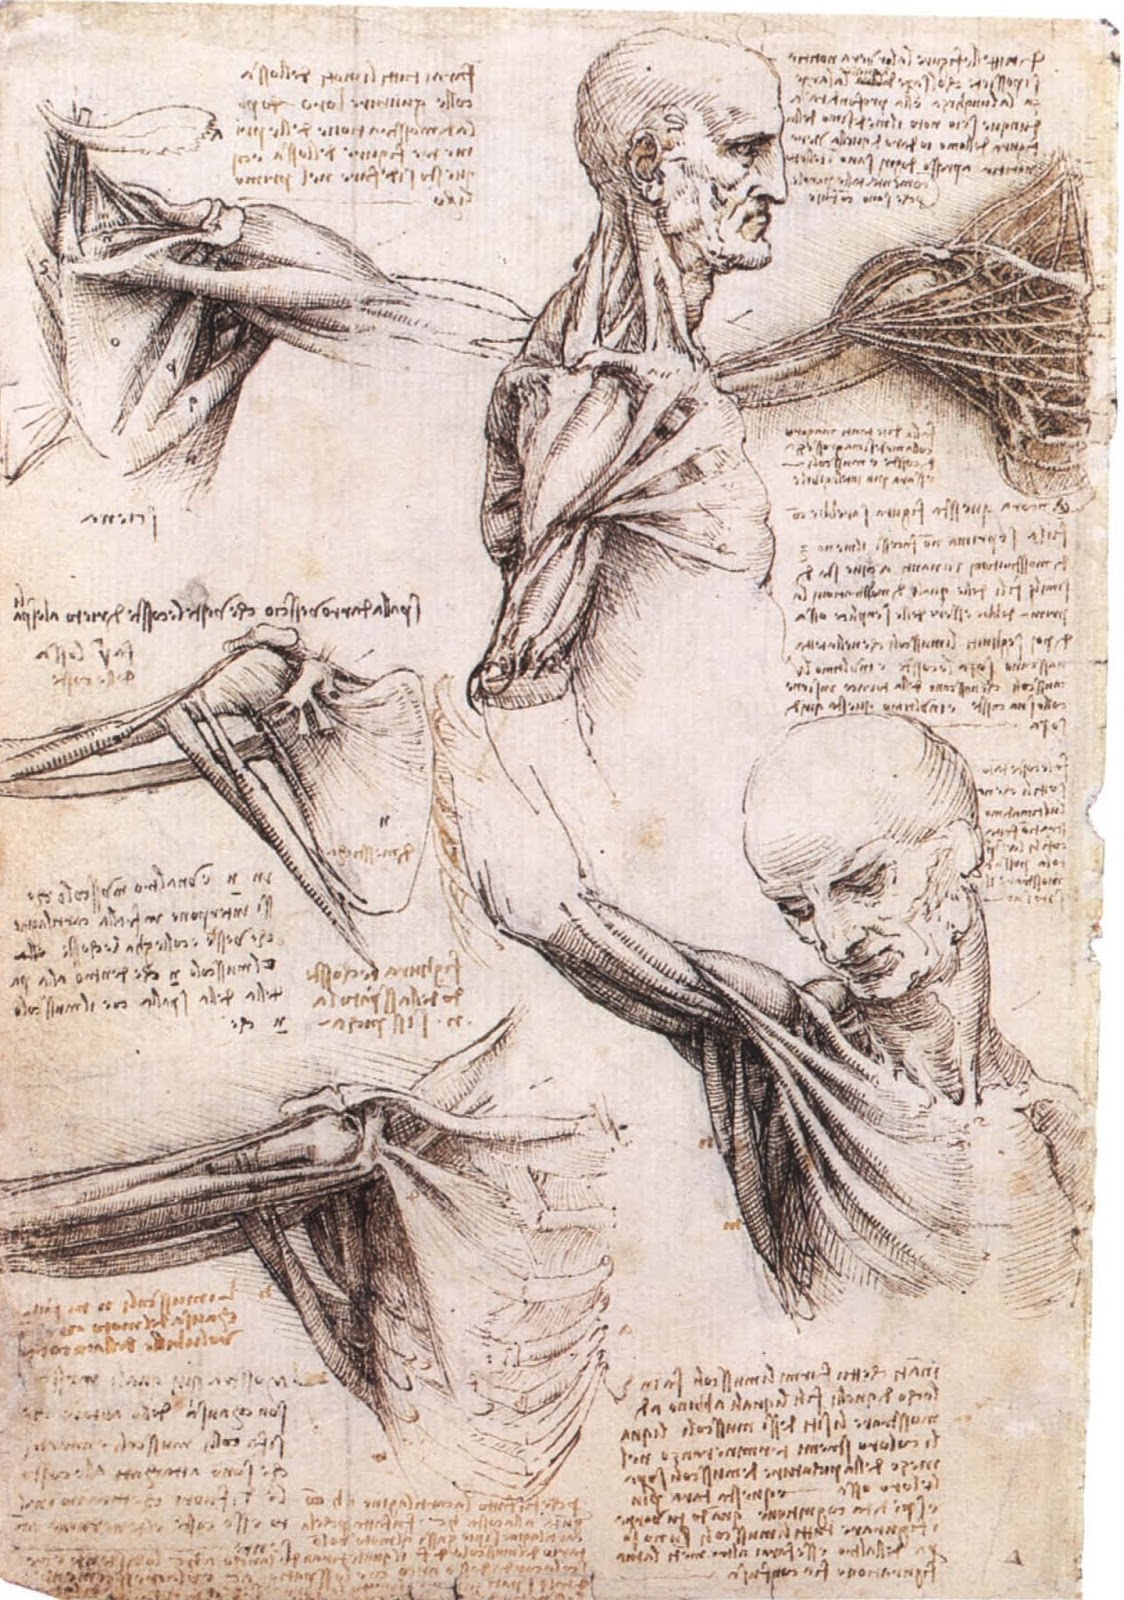 Leonardo+da+Vinci-1452-1519 (740).jpg